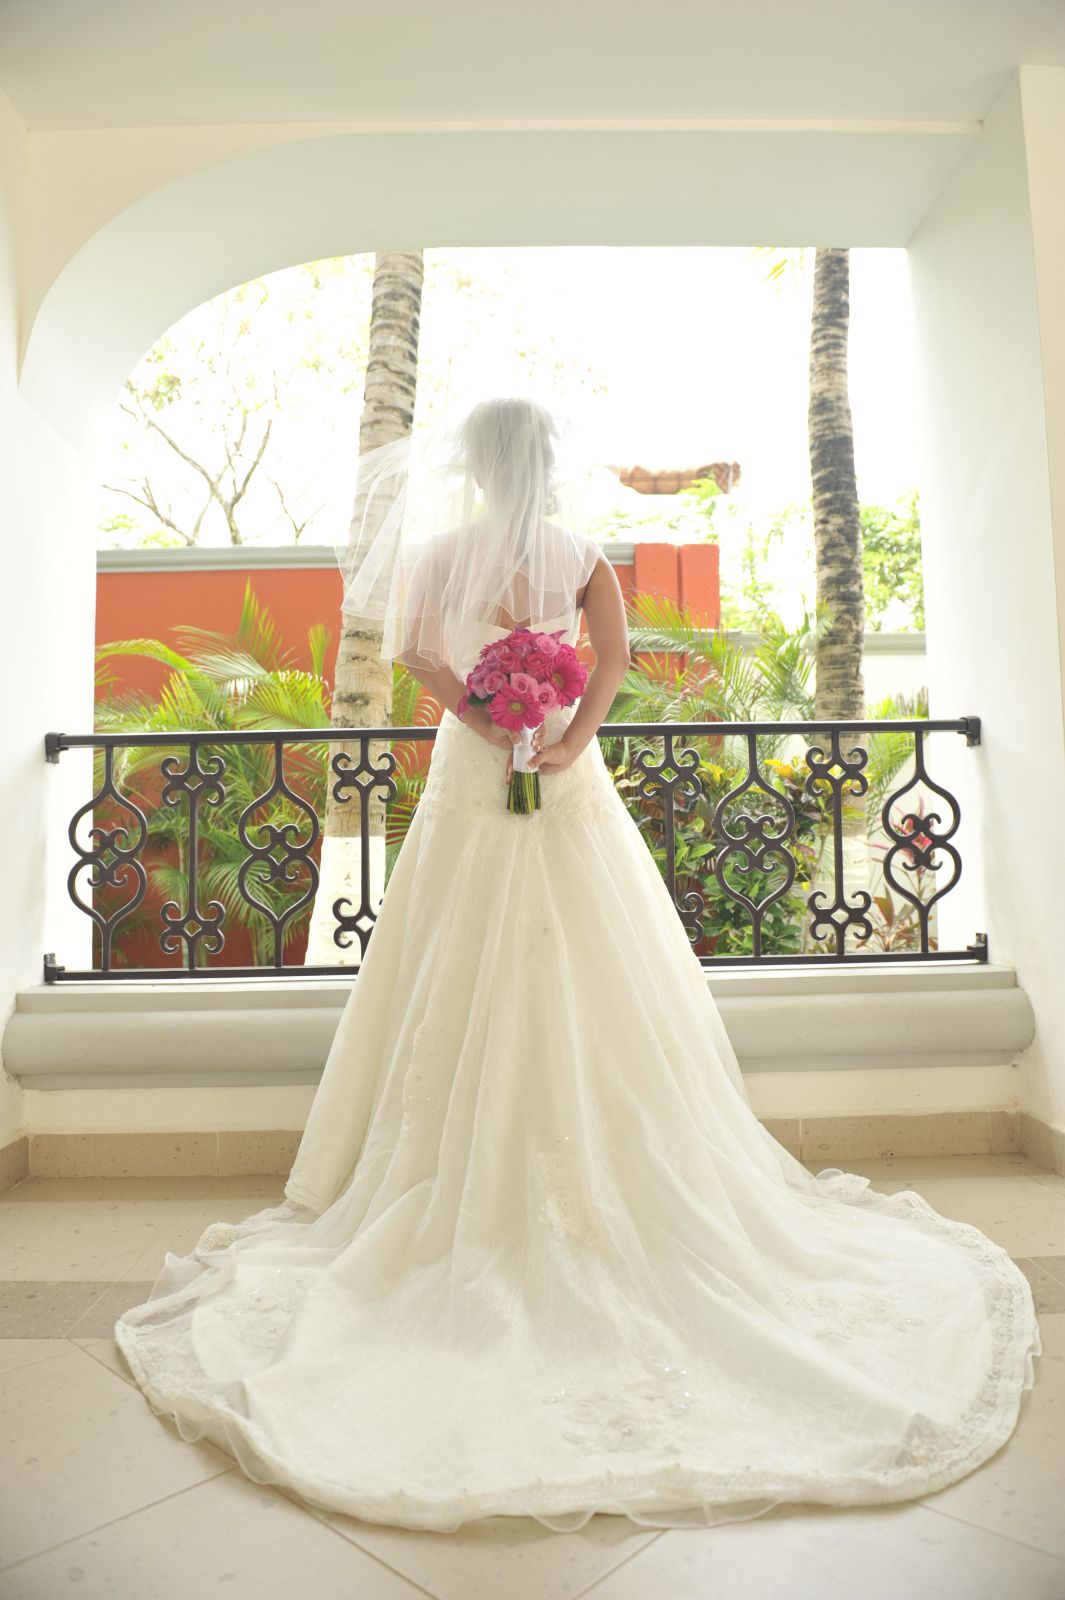 Show us your wedding dress!